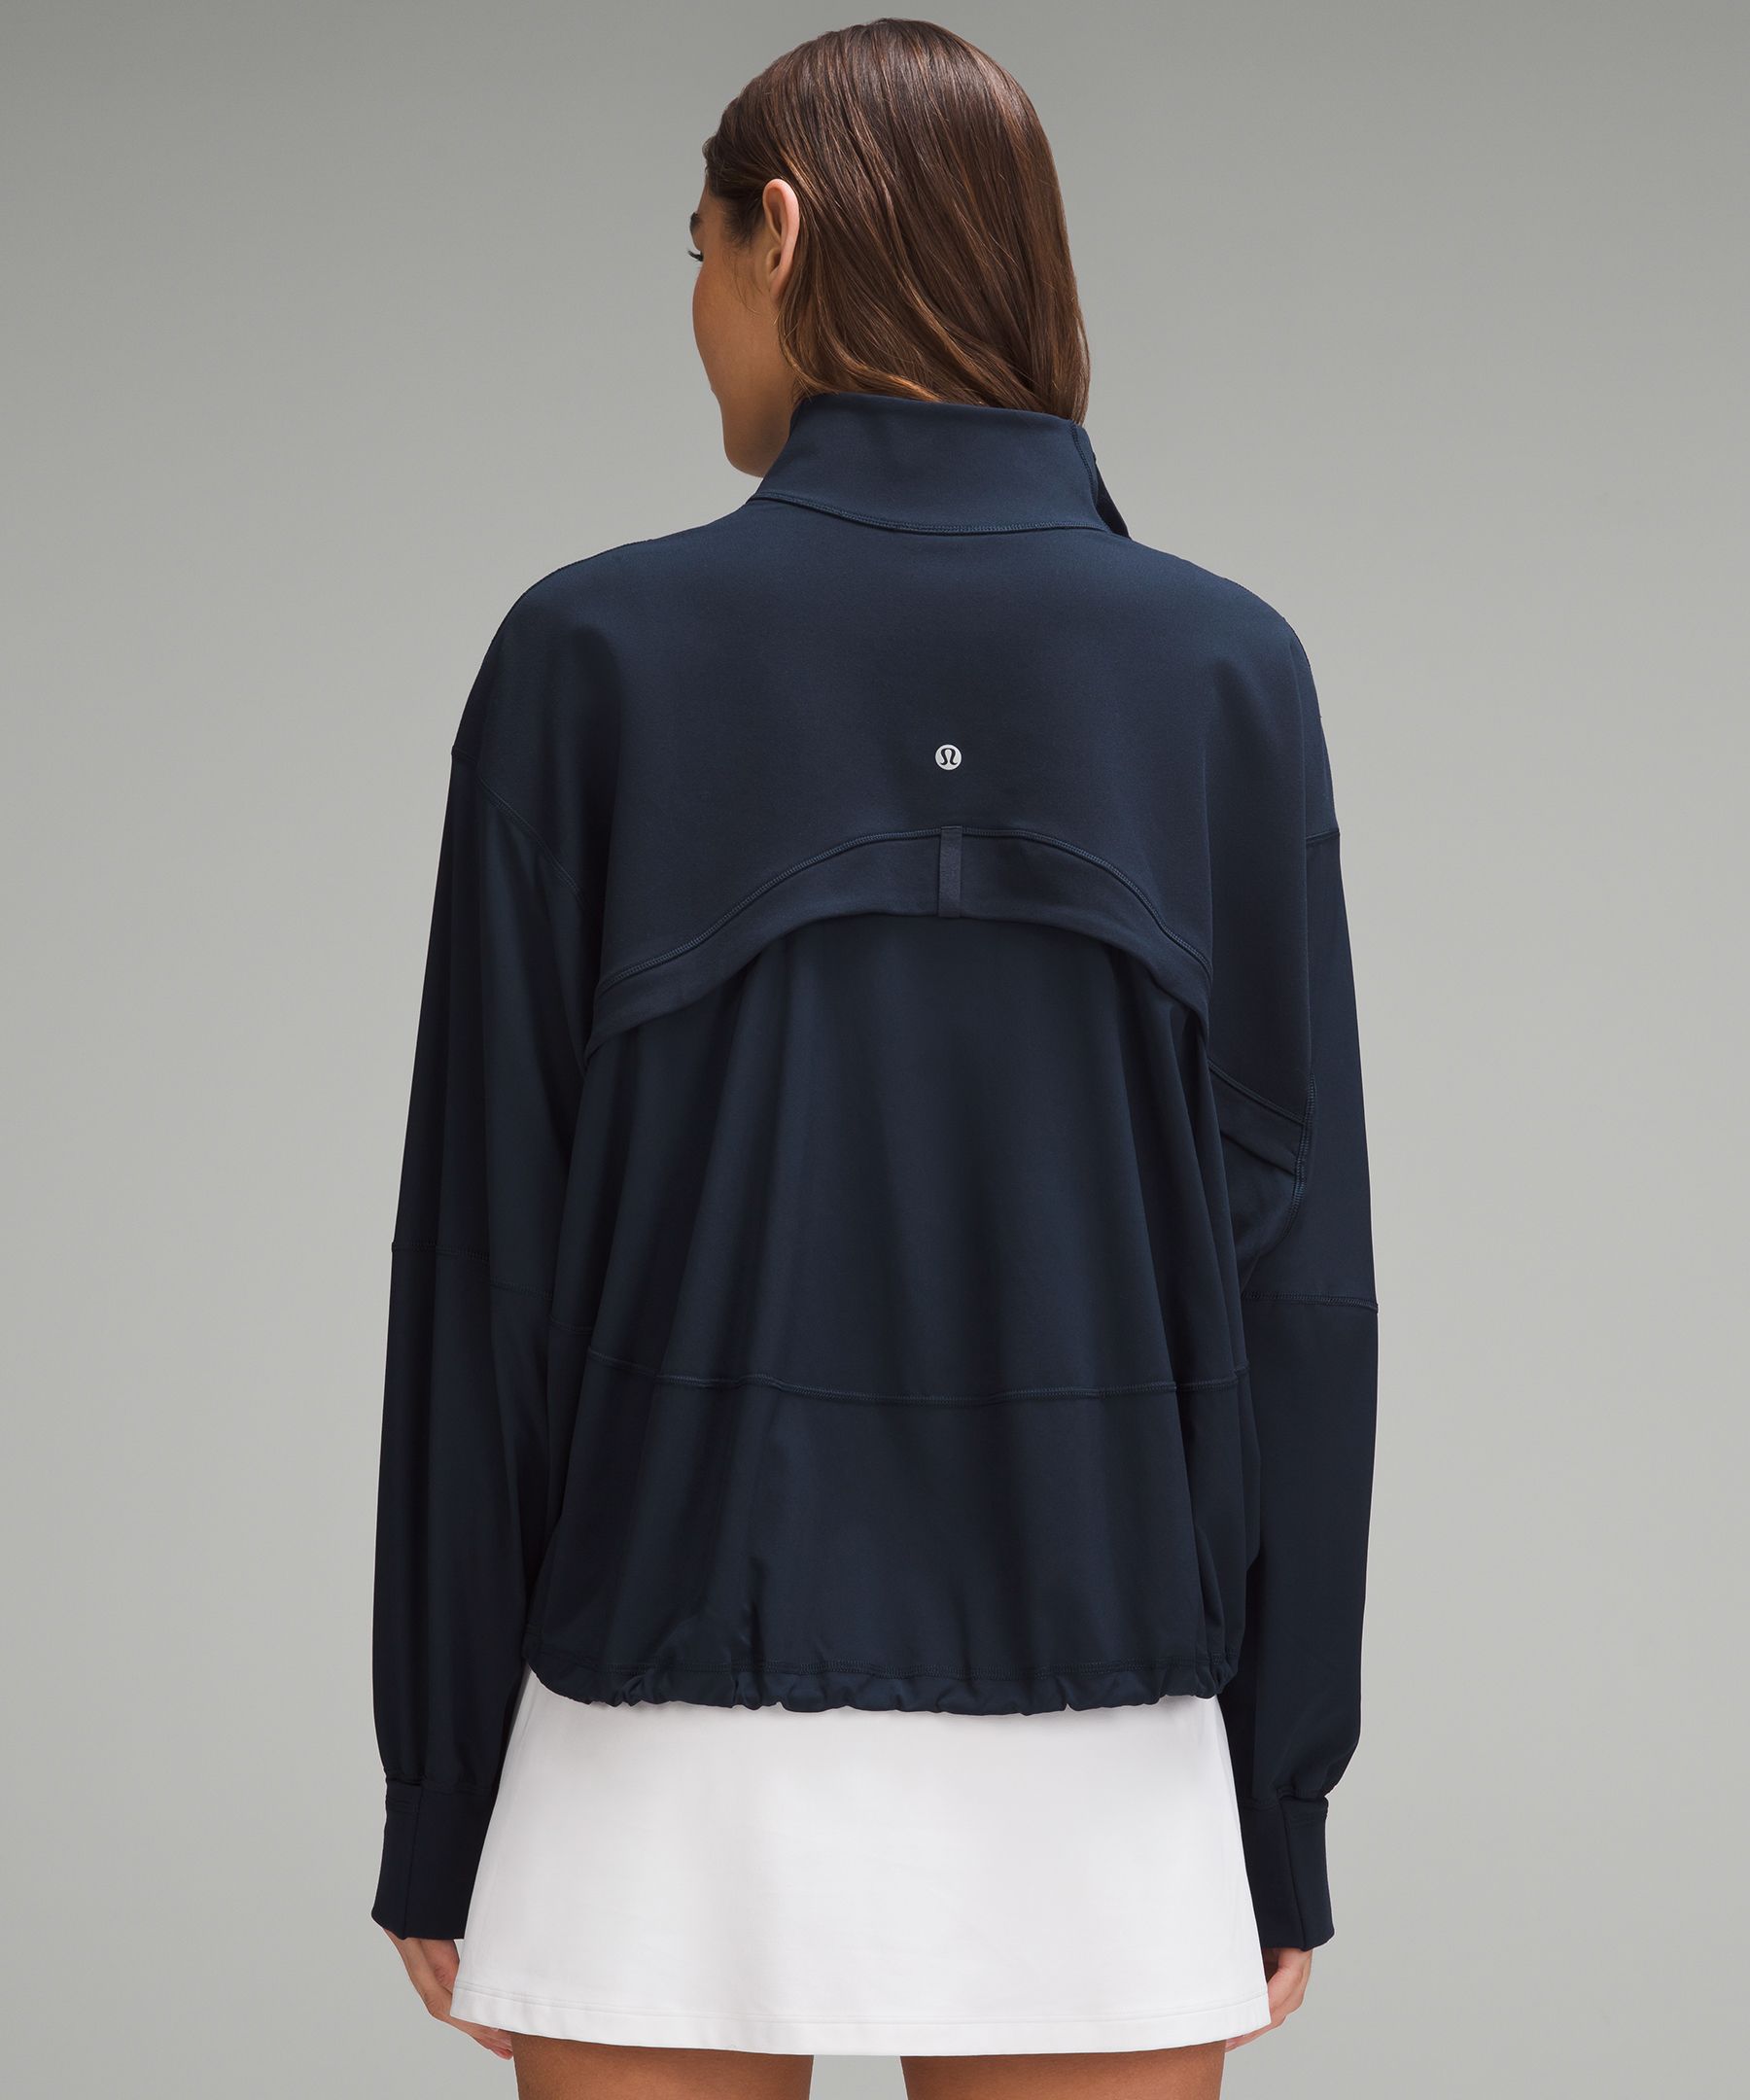 Lululemon Define Jacket Luon Larkspur Size 8 - $61 - From Maggie